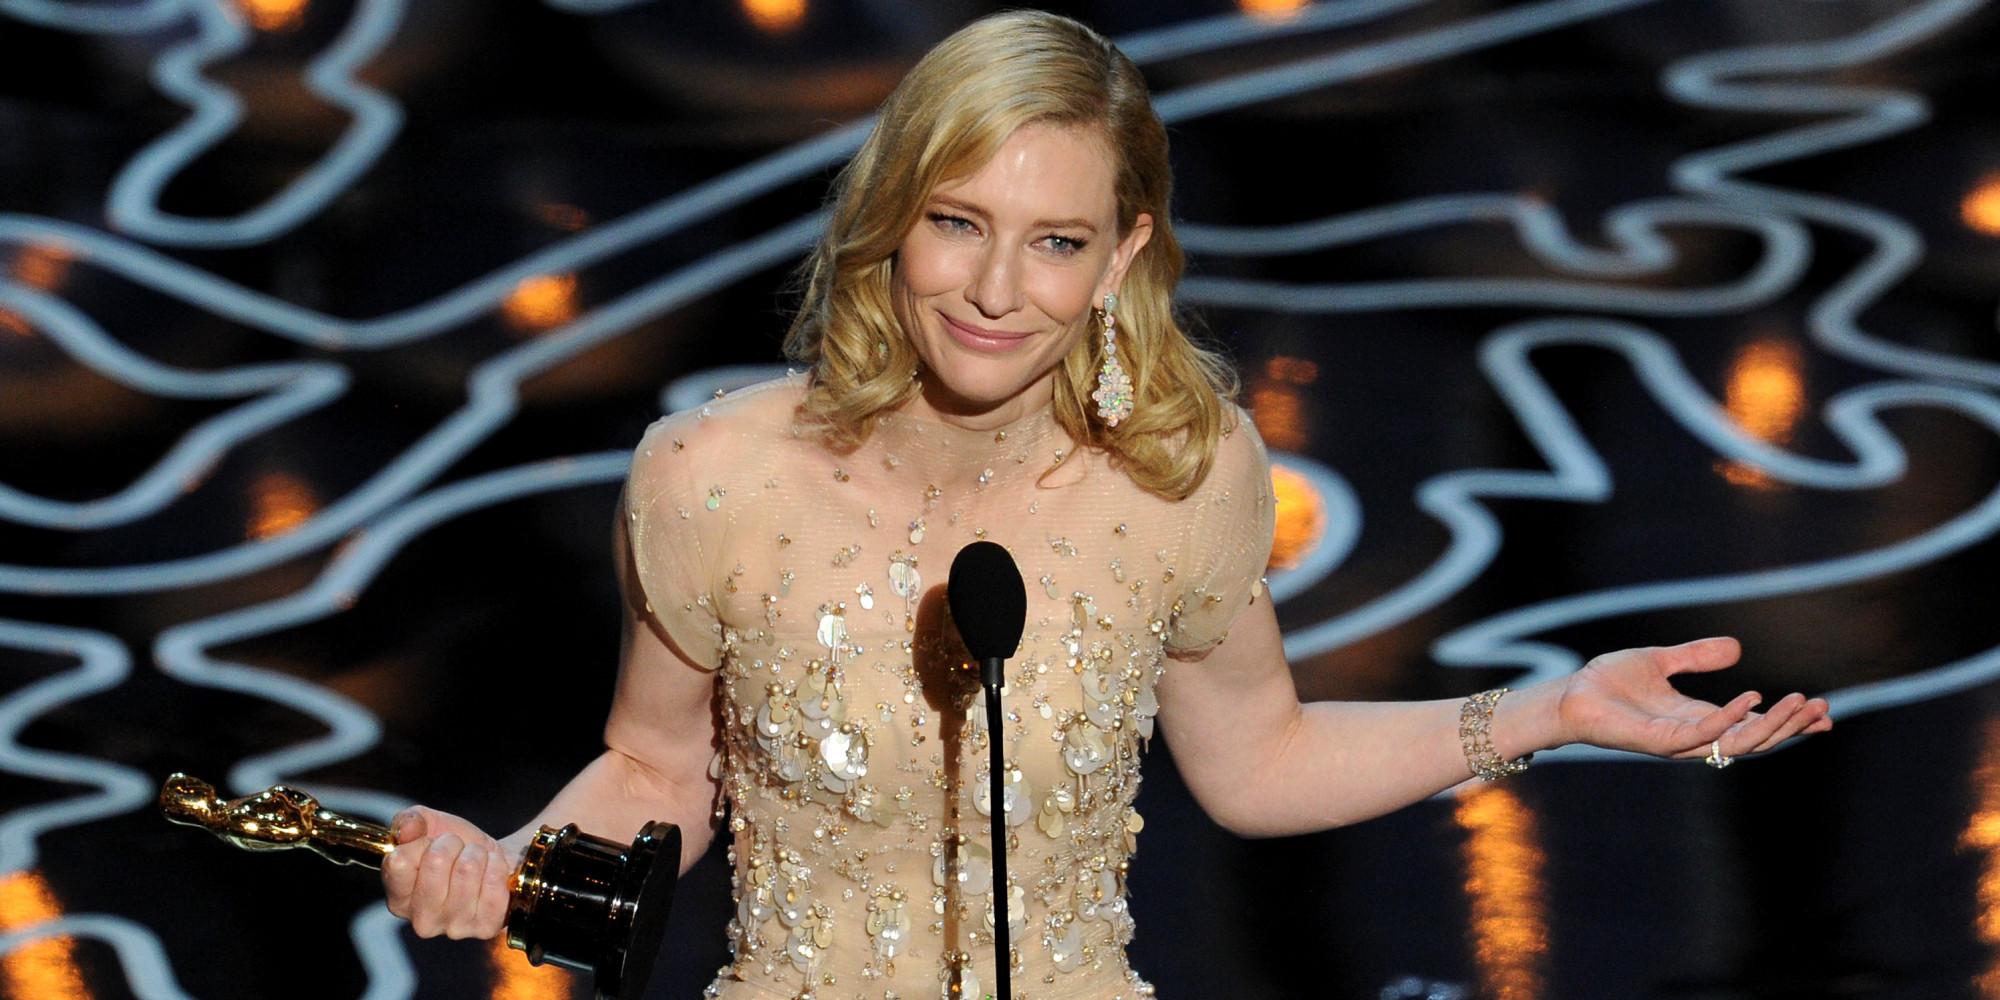 Cate Blanchett Best Actress Oscar Winner At 86th Annual Academy Awards 